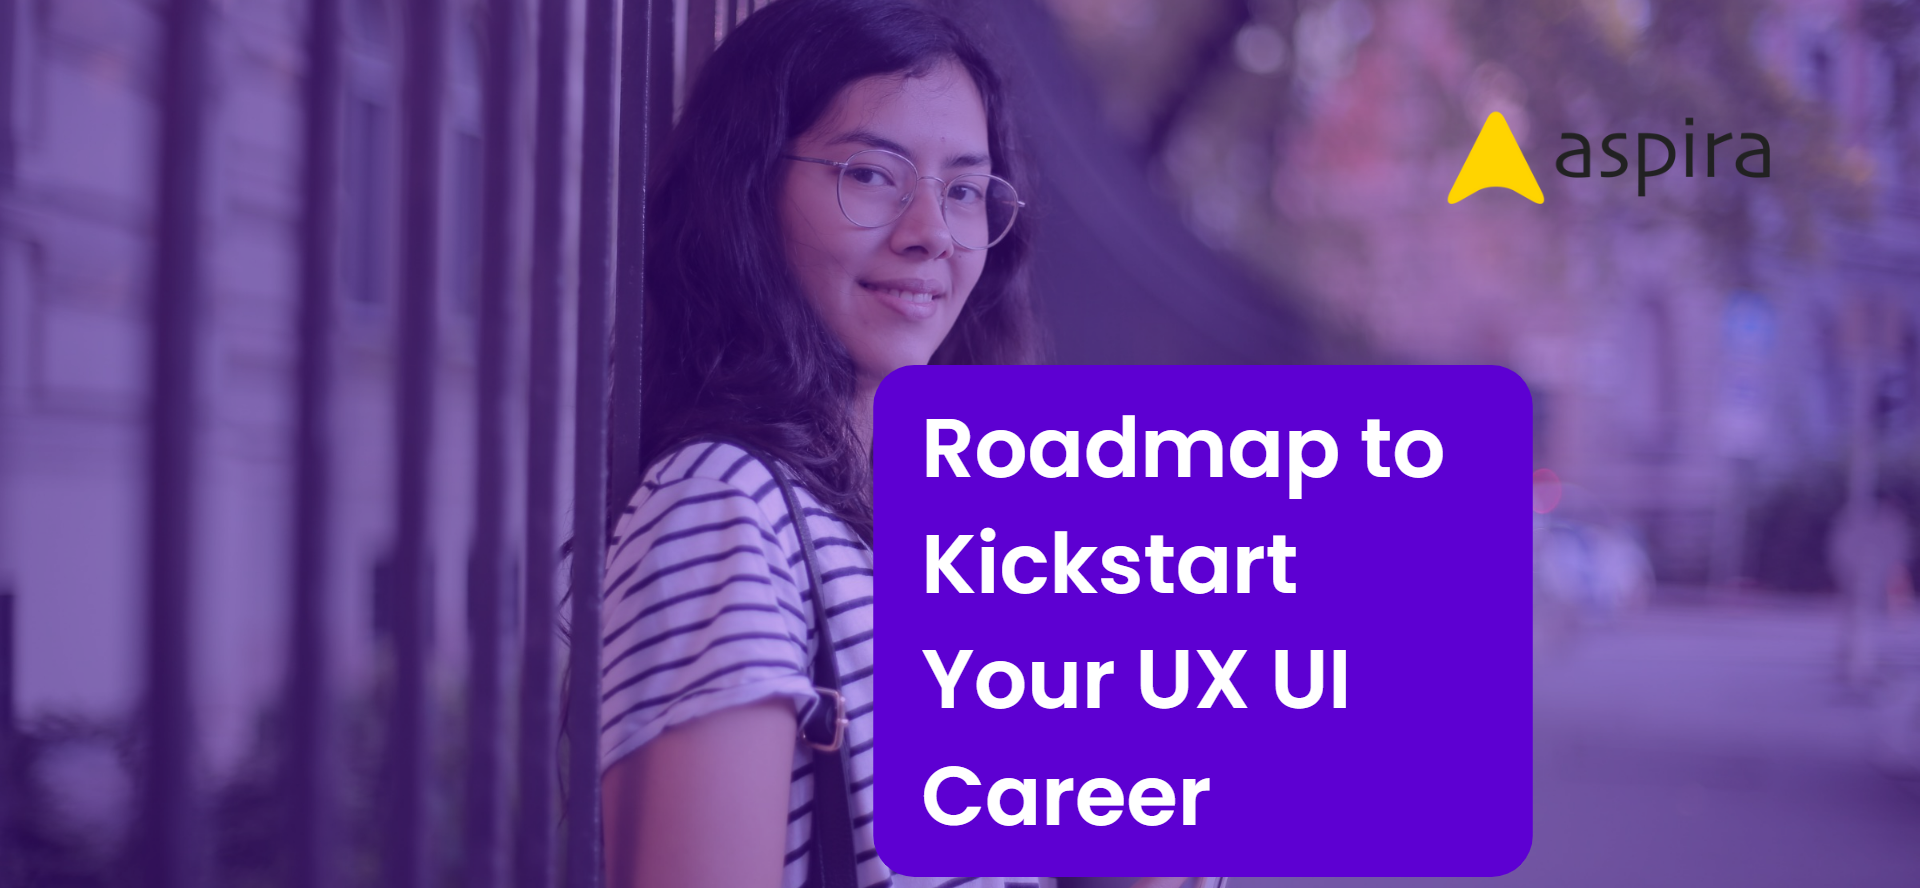 Roadmap to Kickstart Your UX UI Career